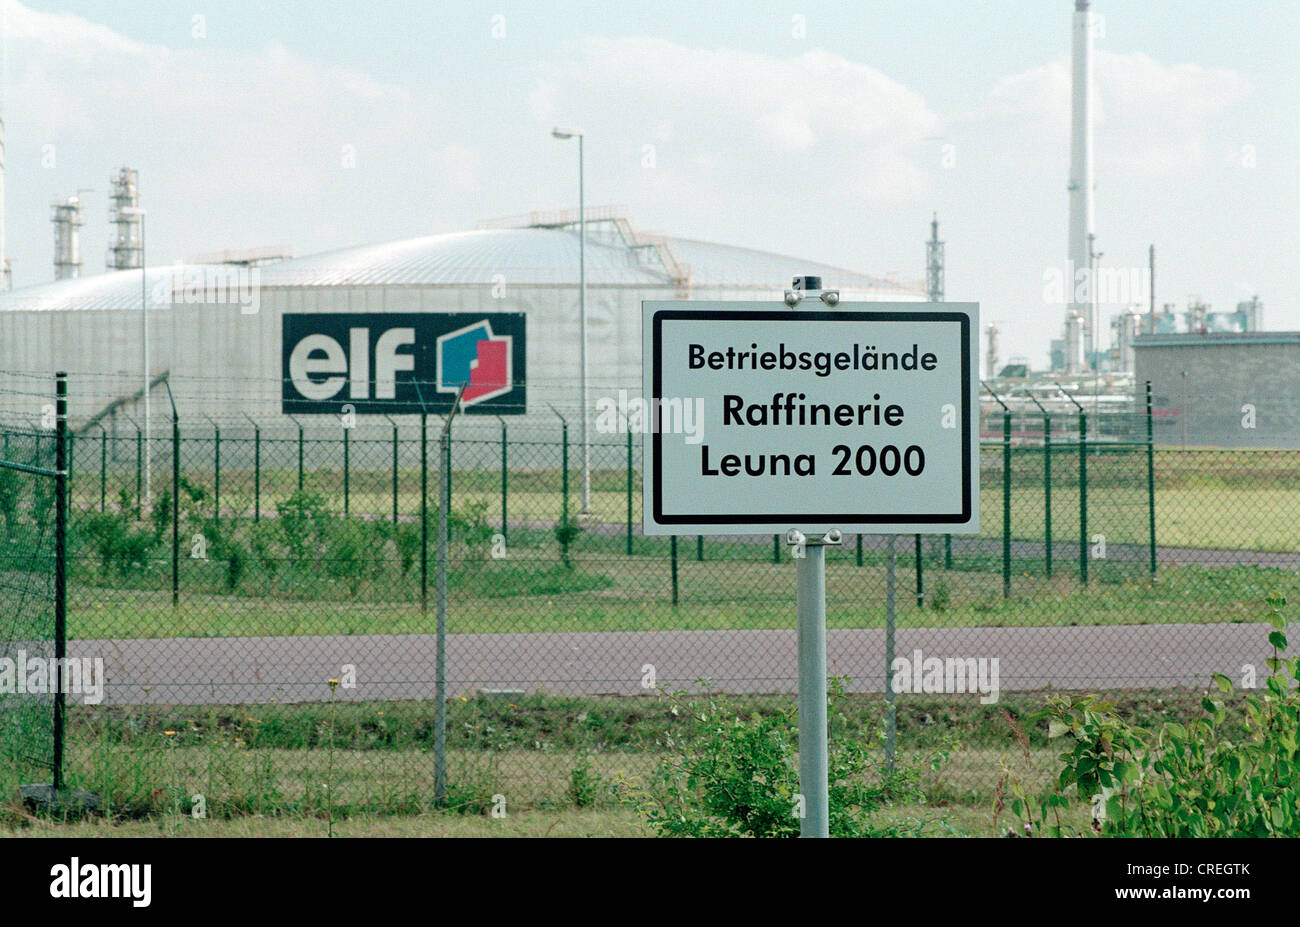 Elf refinery at Leuna, Germany Stock Photo